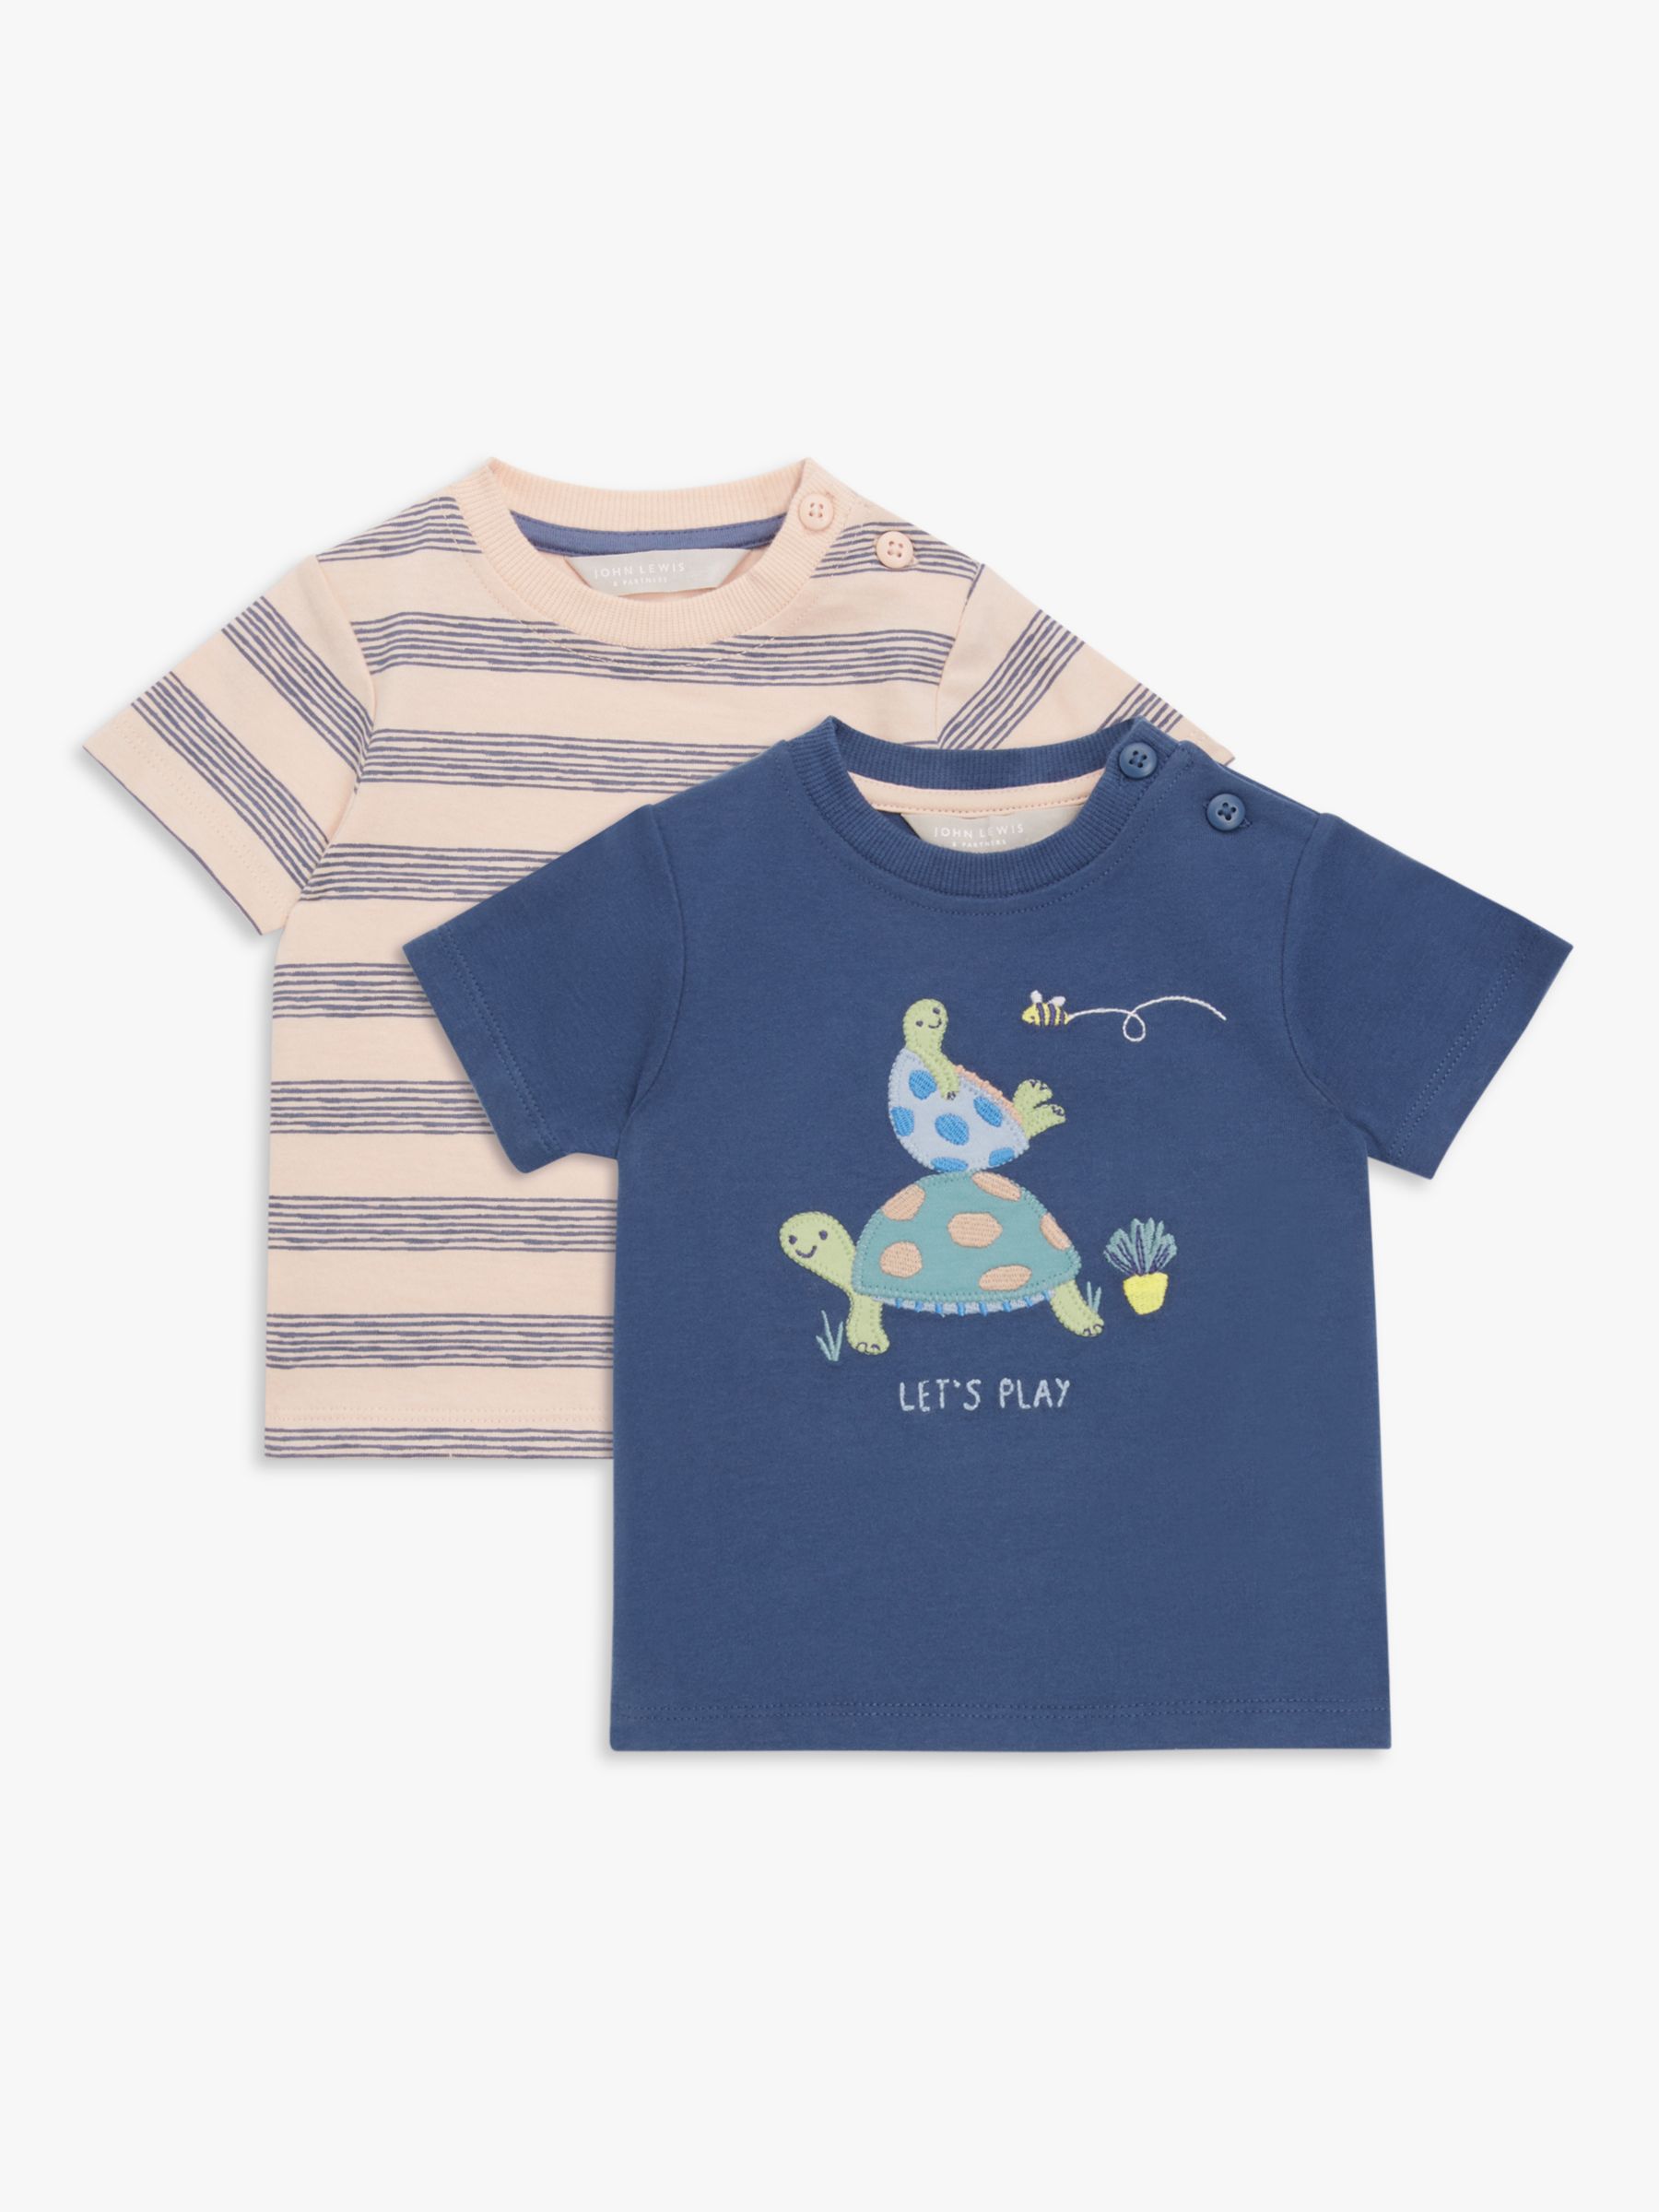 New Ex John Lewis Baby Boys Toddler Short Sleeve T-Shirt 0-3 Months 2-3 Years 